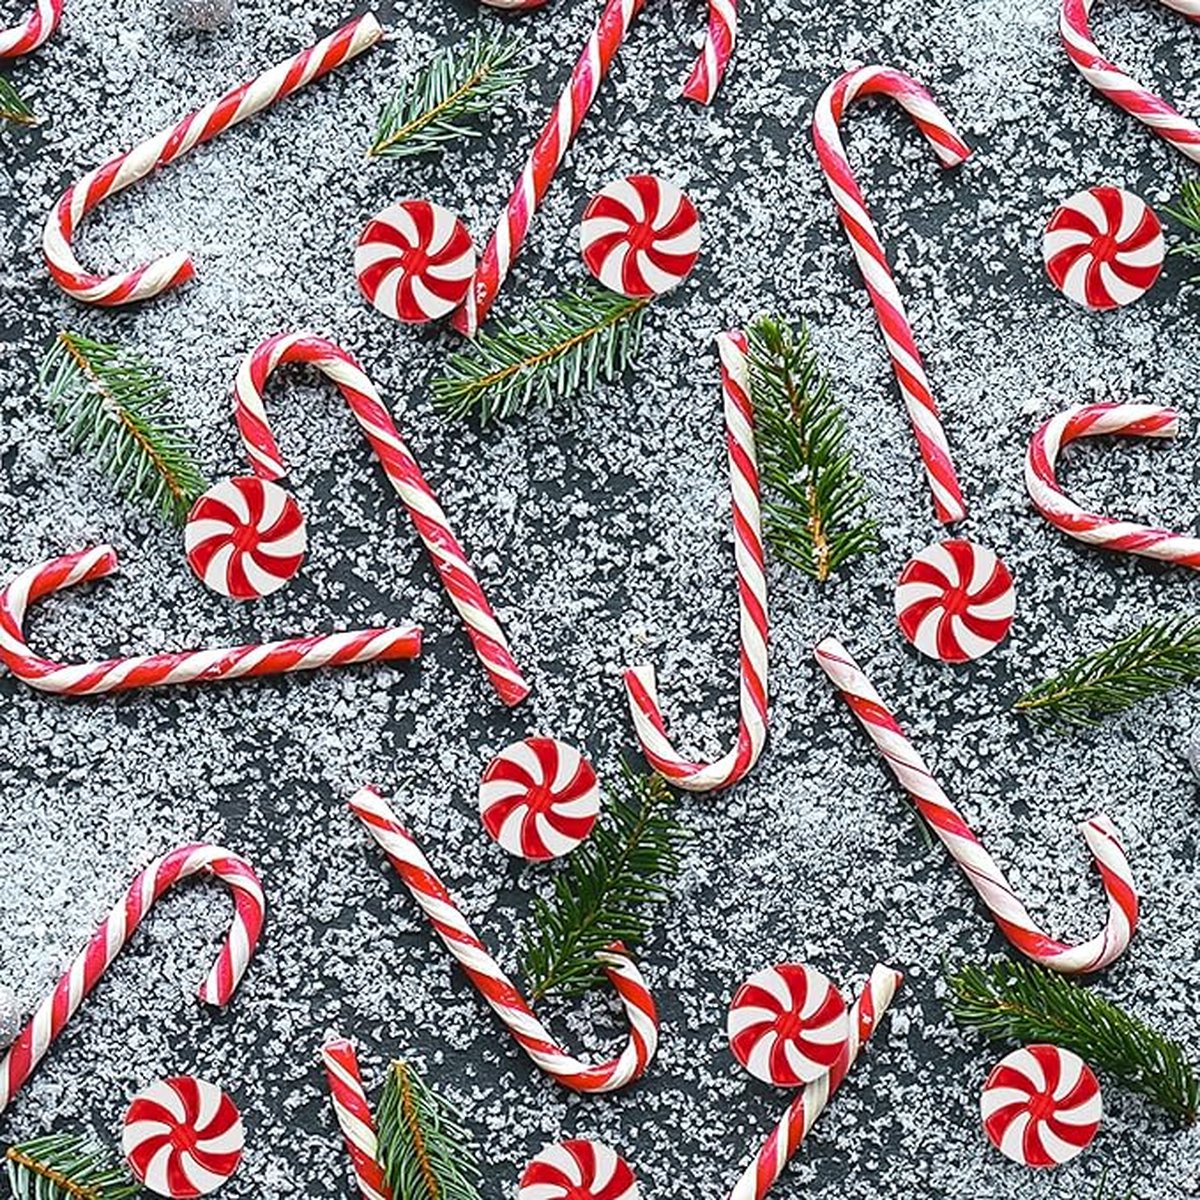 Kerstboom Decoraties 60Pcs Candy Canes - Plastic Pepermunt Candy Riet Ornamenten voor Kerstboom Decor Snoep Lolly Craft Kerst Party Supplies